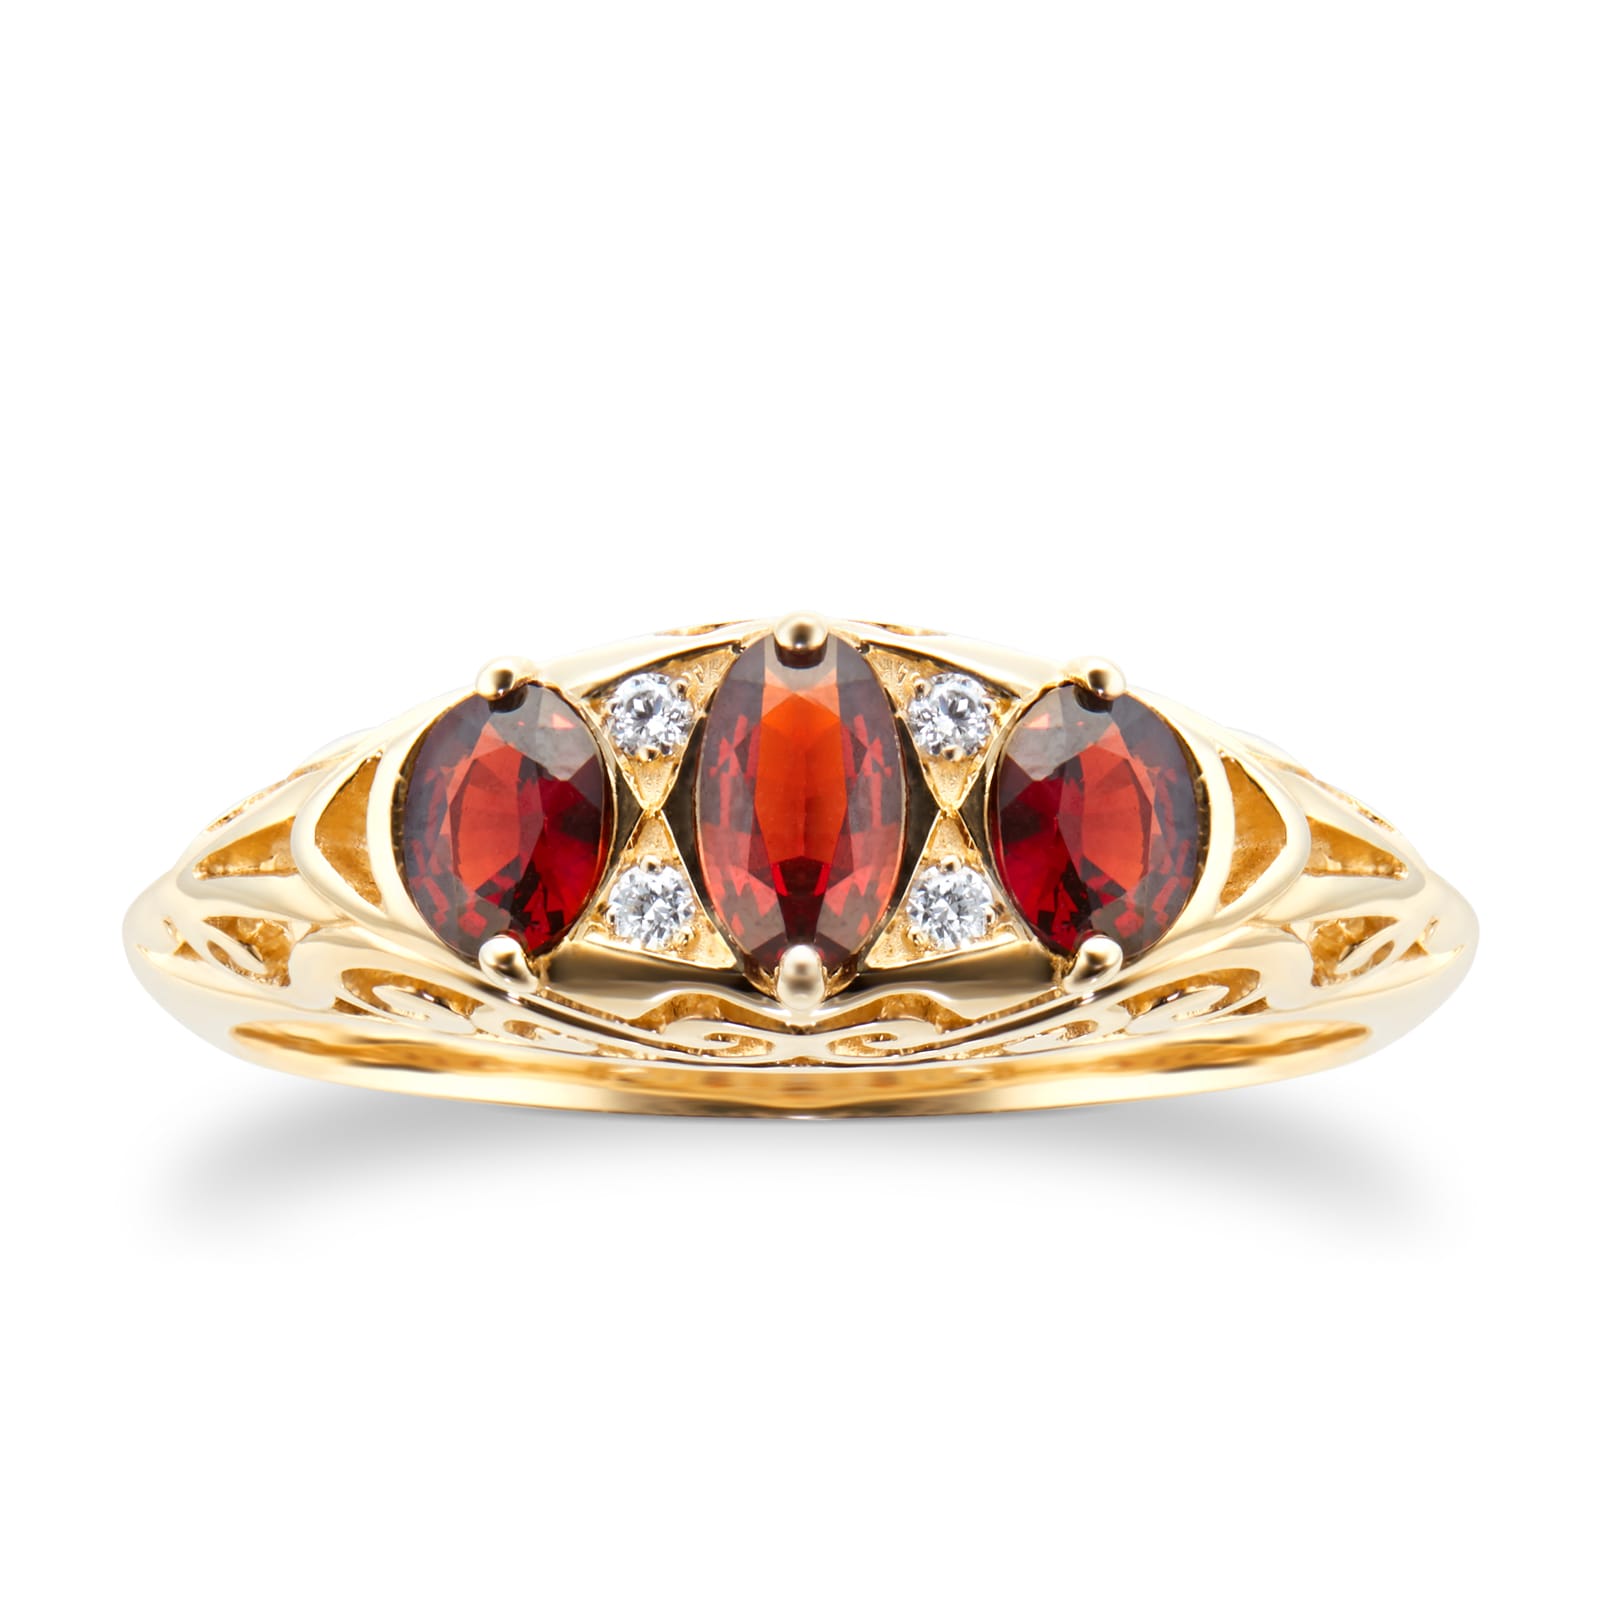 9ct Yellow Gold Victorian Style 3 Stone Garnet & Diamond Ring - Ring Size M.5